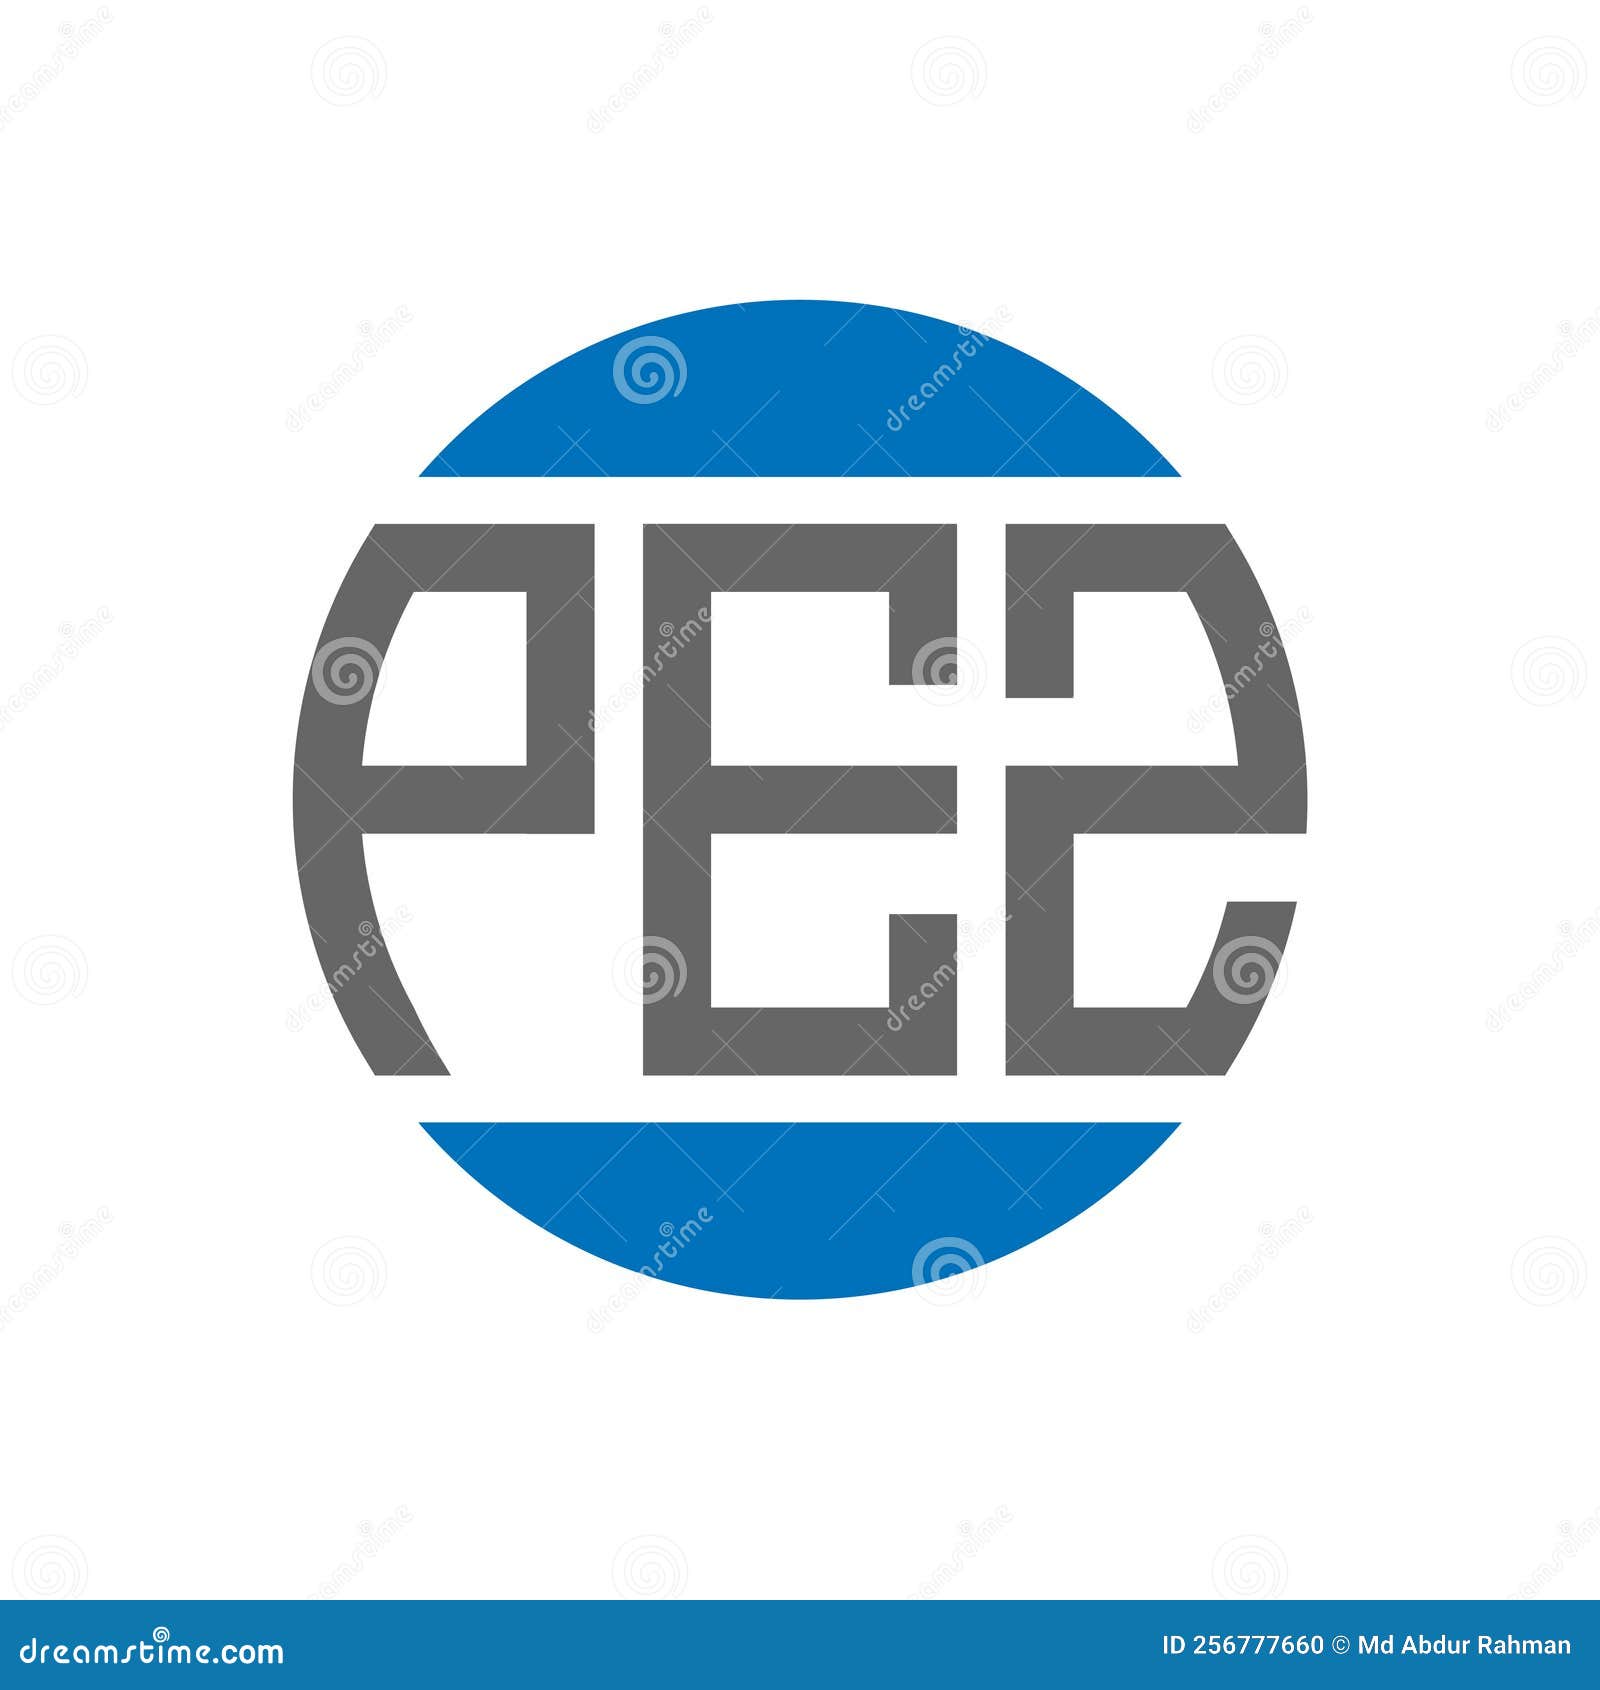 pez letter logo  on white background. pez creative initials circle logo concept. pez letter 